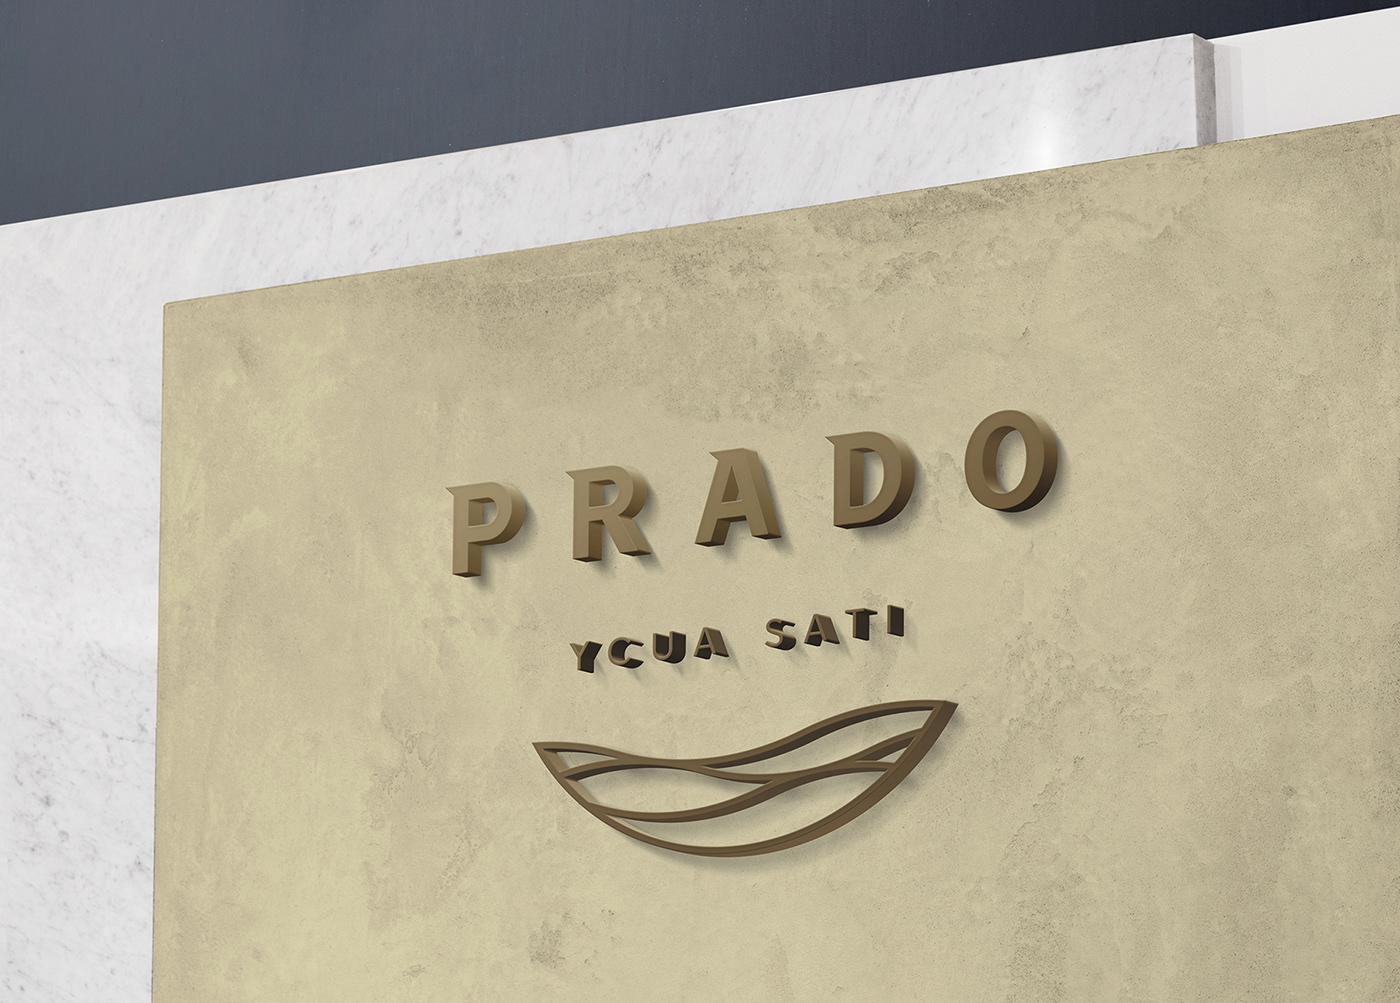 building design edificio logo paraguay Prado